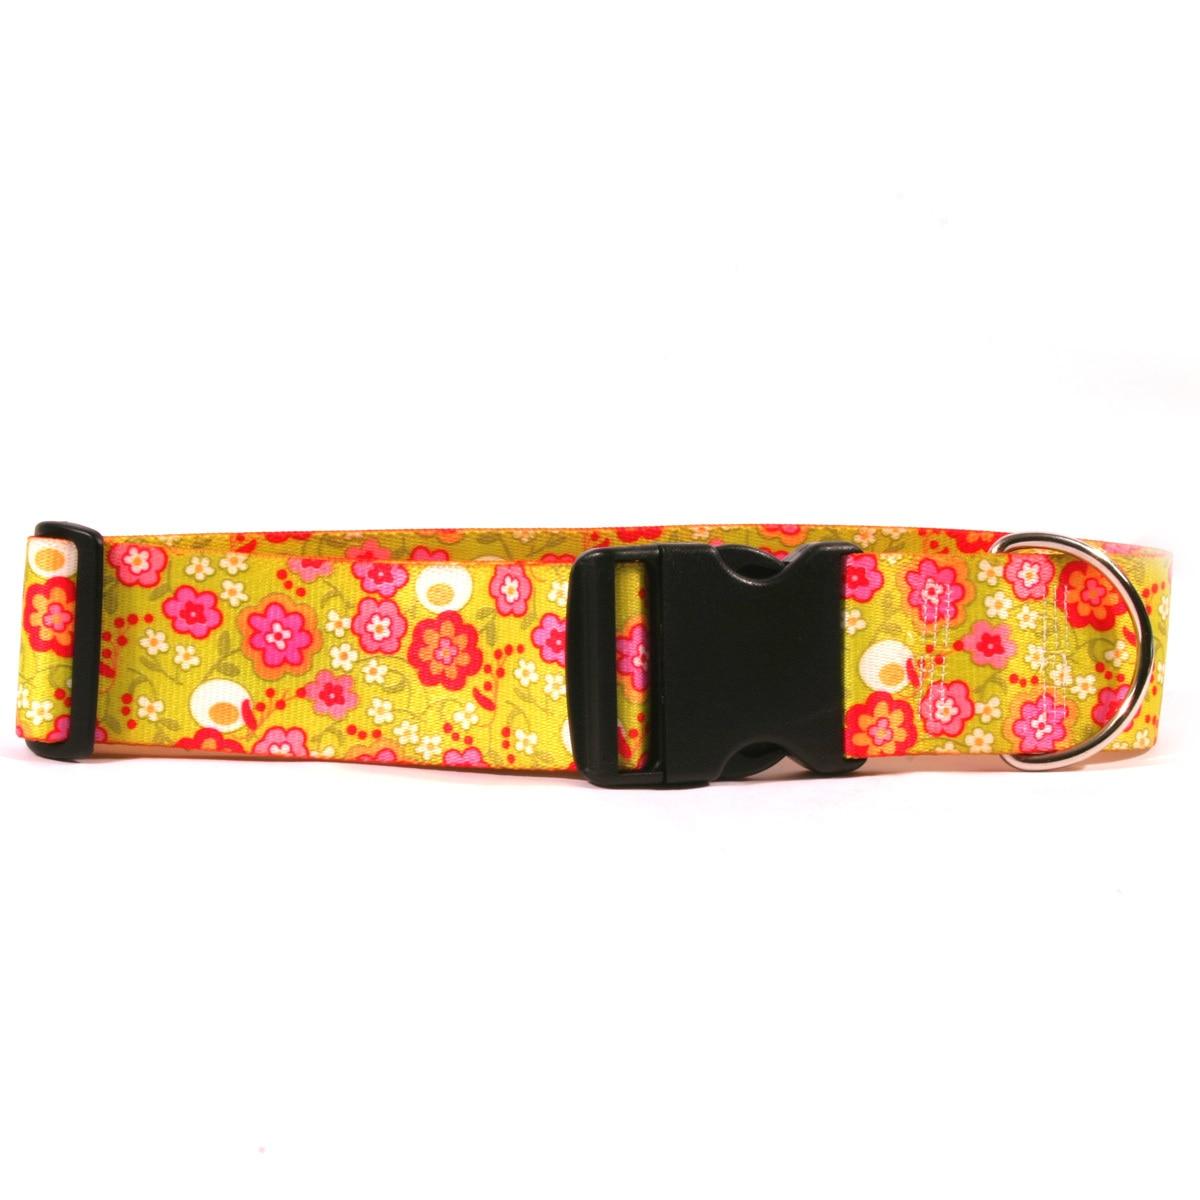 Fleur de Lis Gold Dog Collar by Yellow Dog Design, Inc - Order